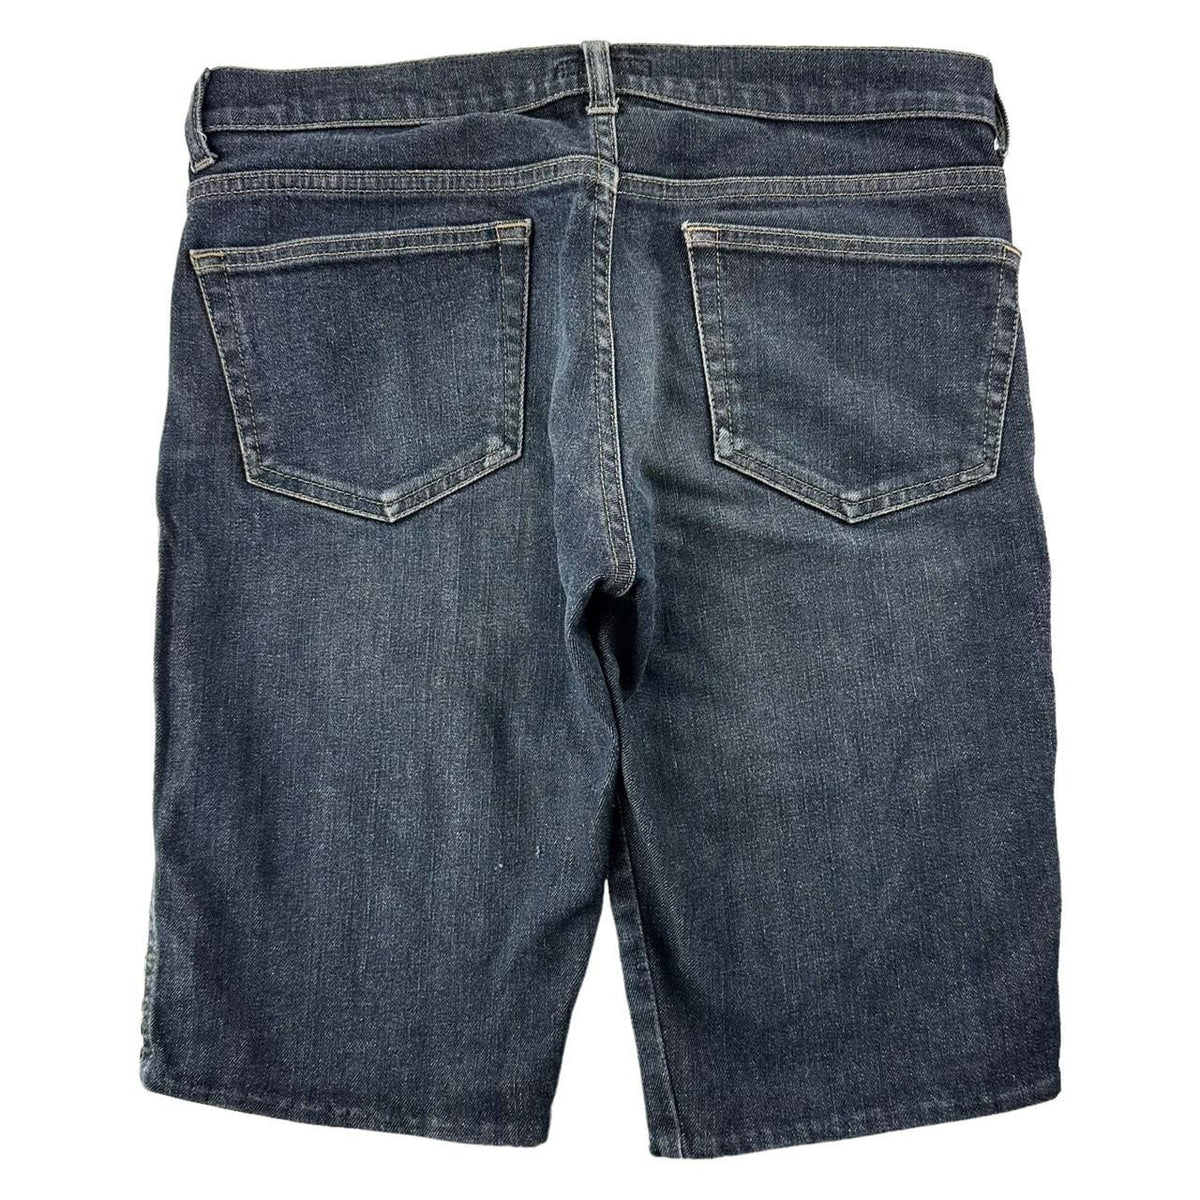 Burberry nova check piping shorts woman’s W30